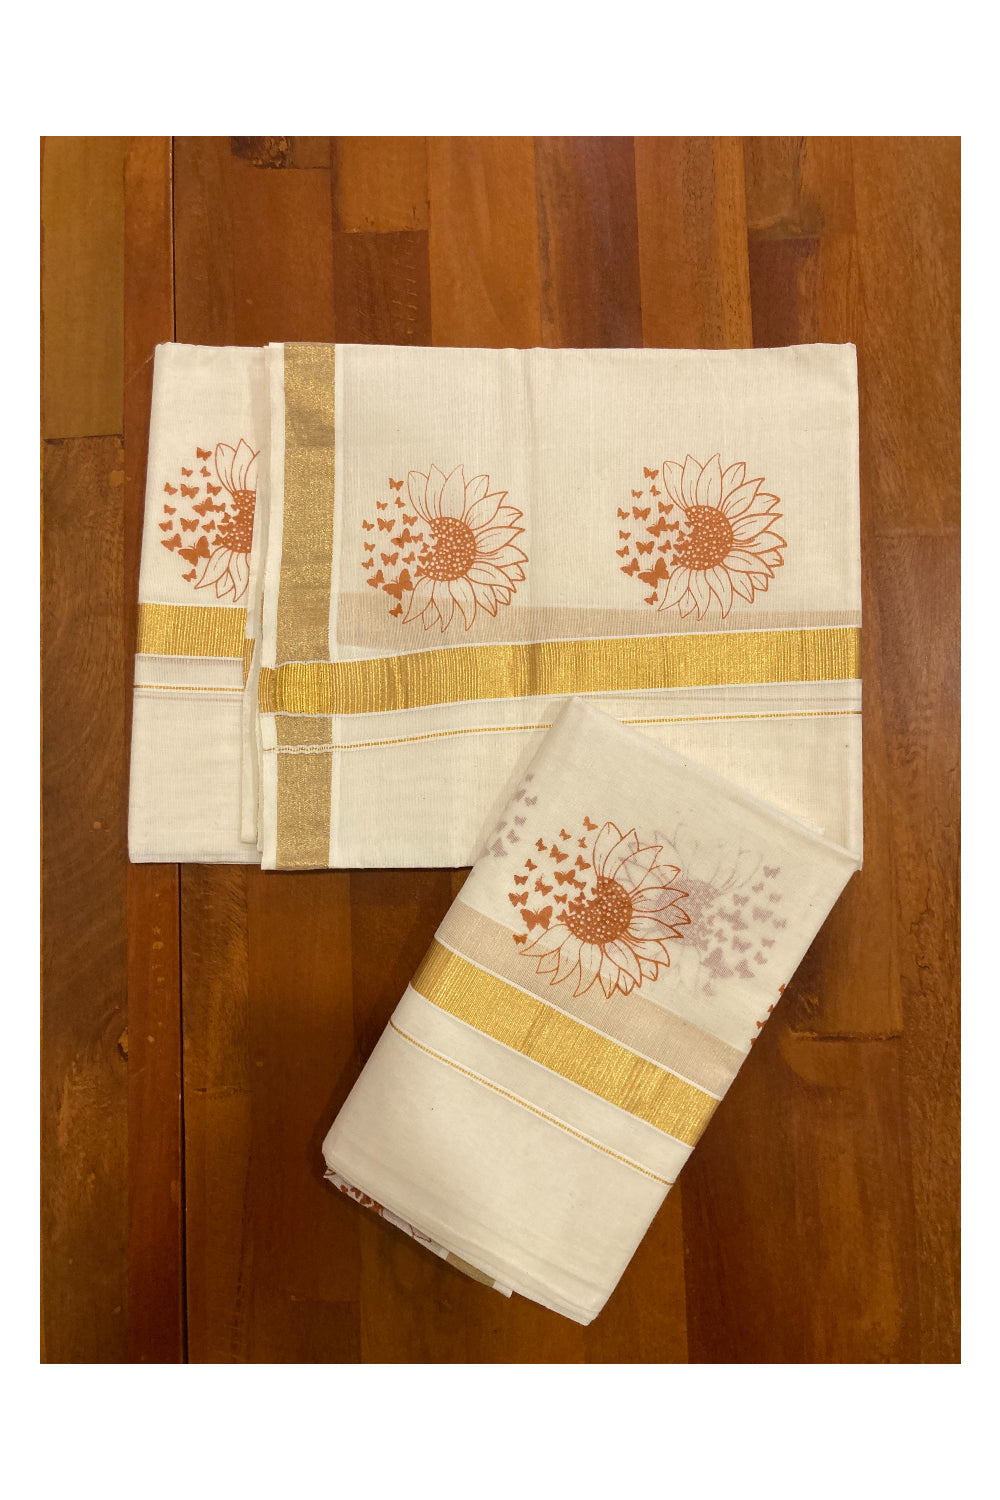 Kerala Cotton Kasavu Set Mundu (Mundum Neriyathum) with Light Brown Block Prints on Border